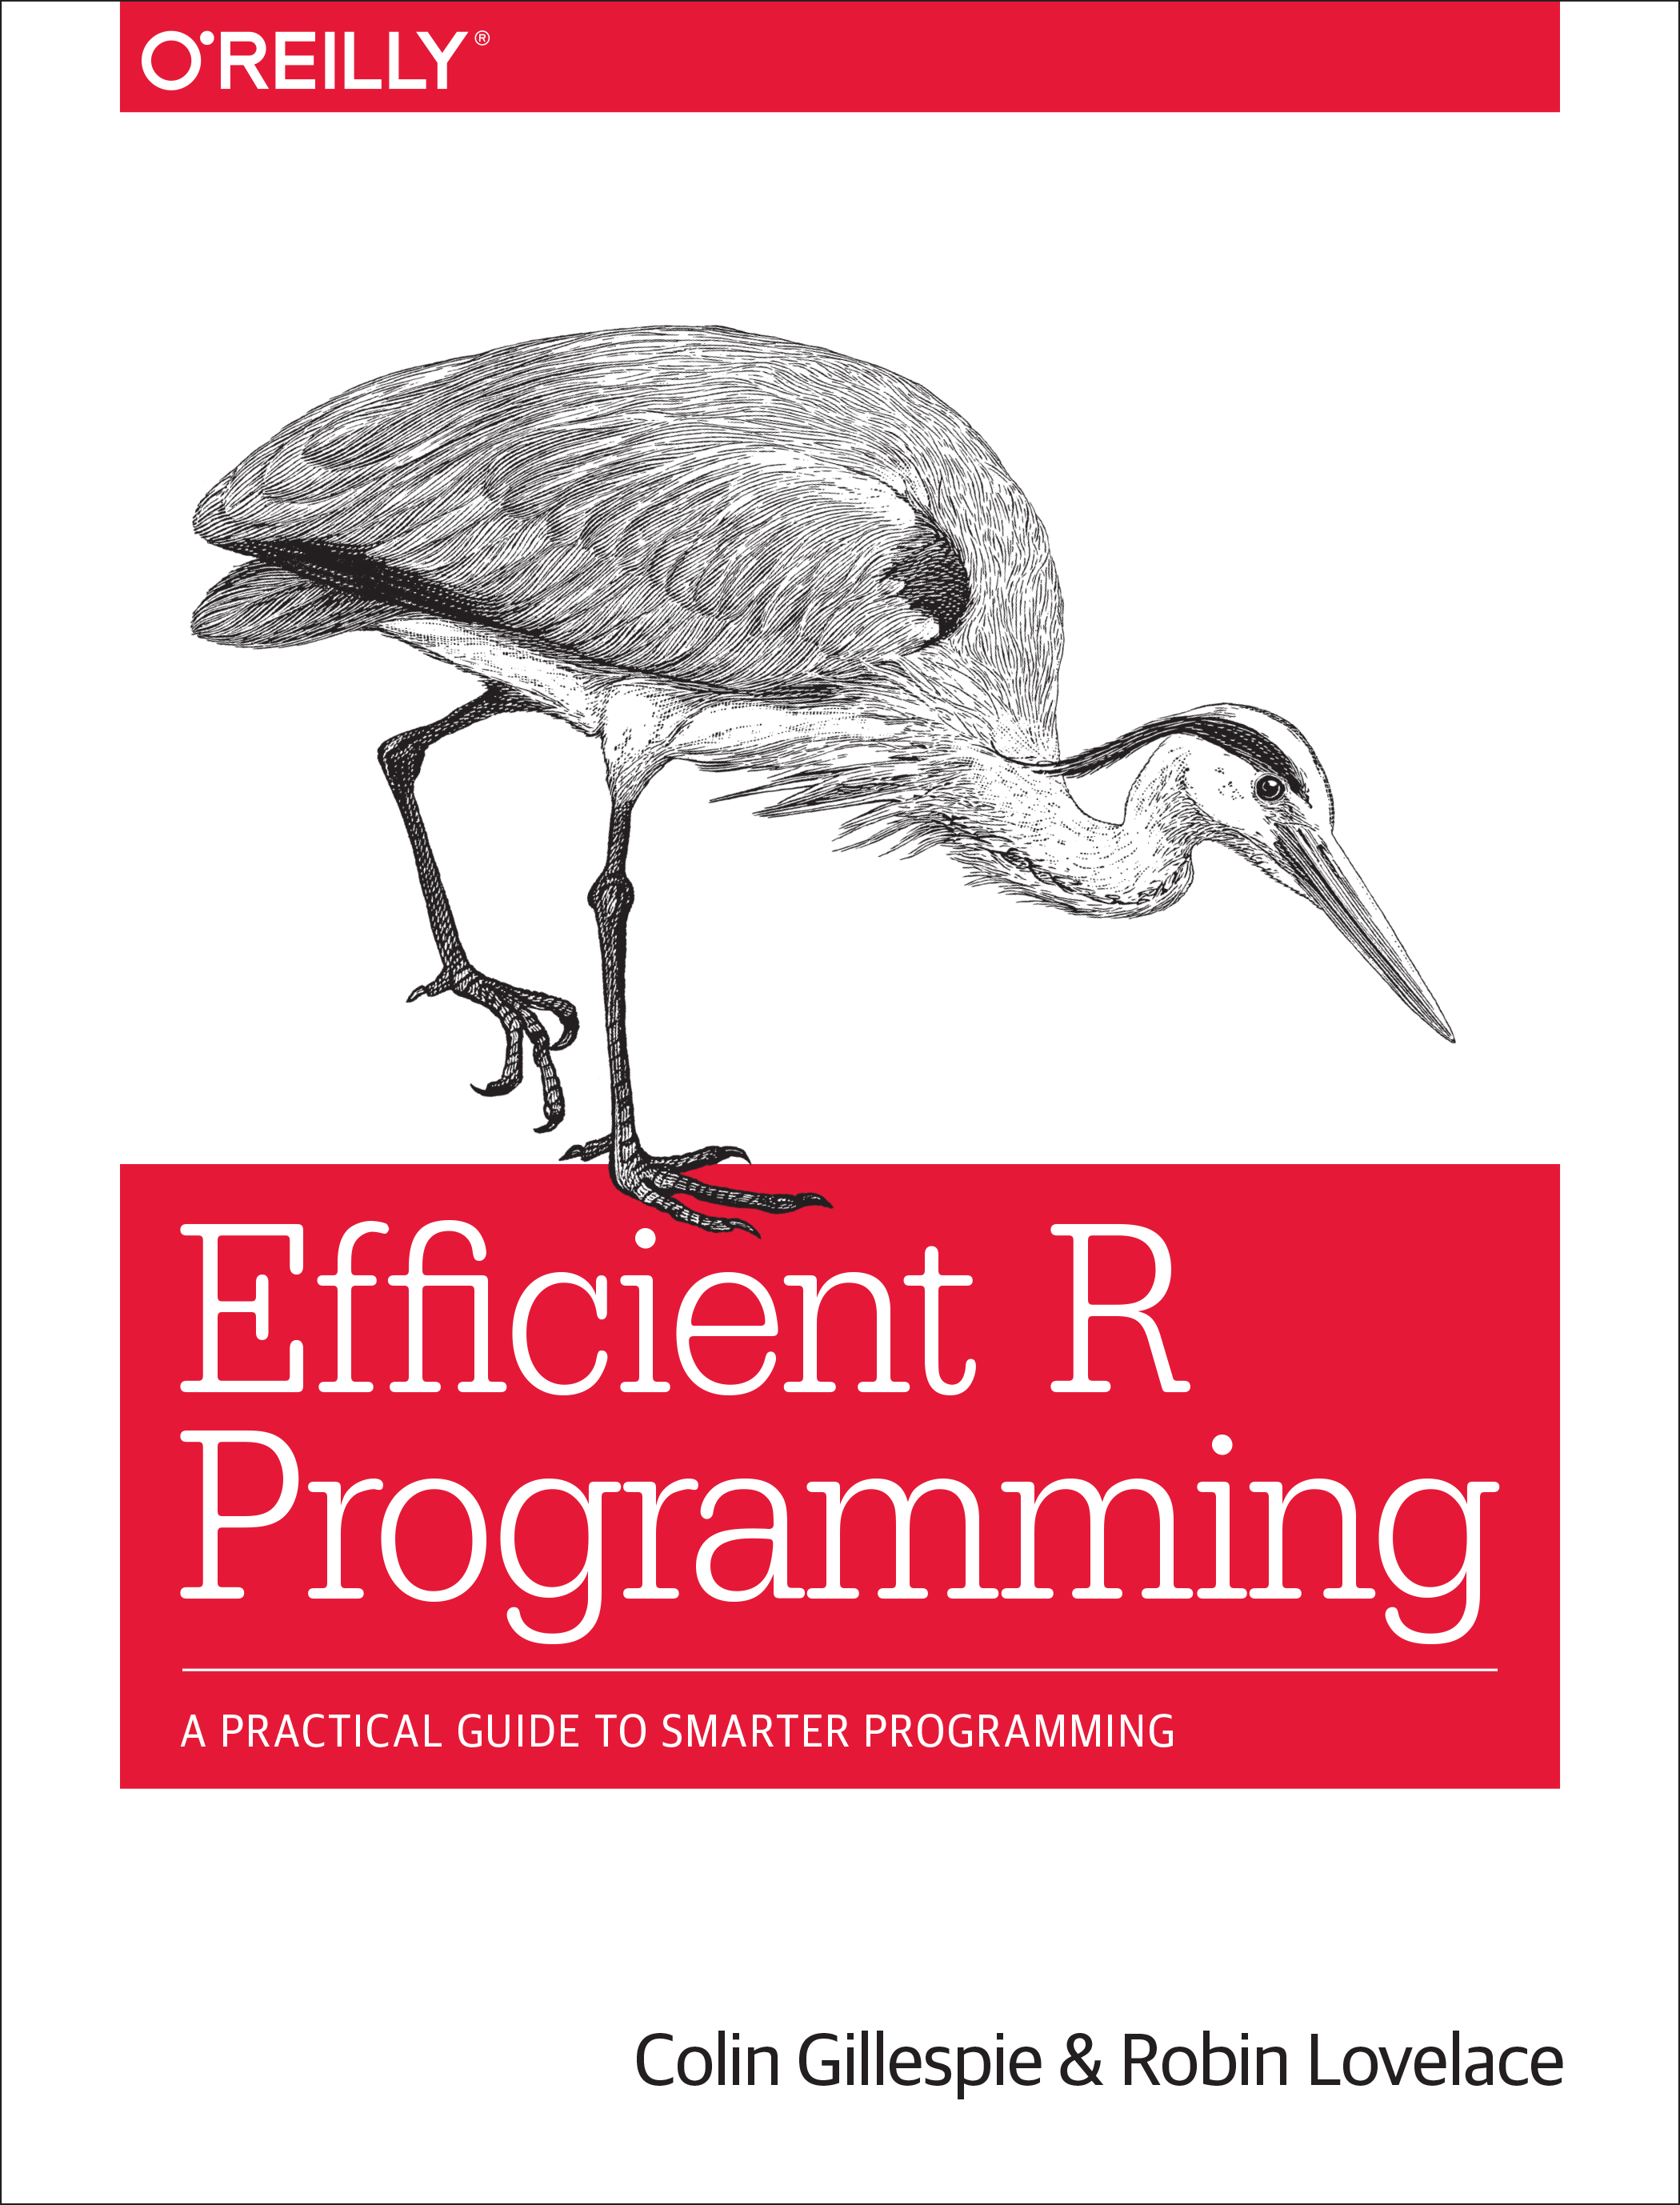 Efficient R programming